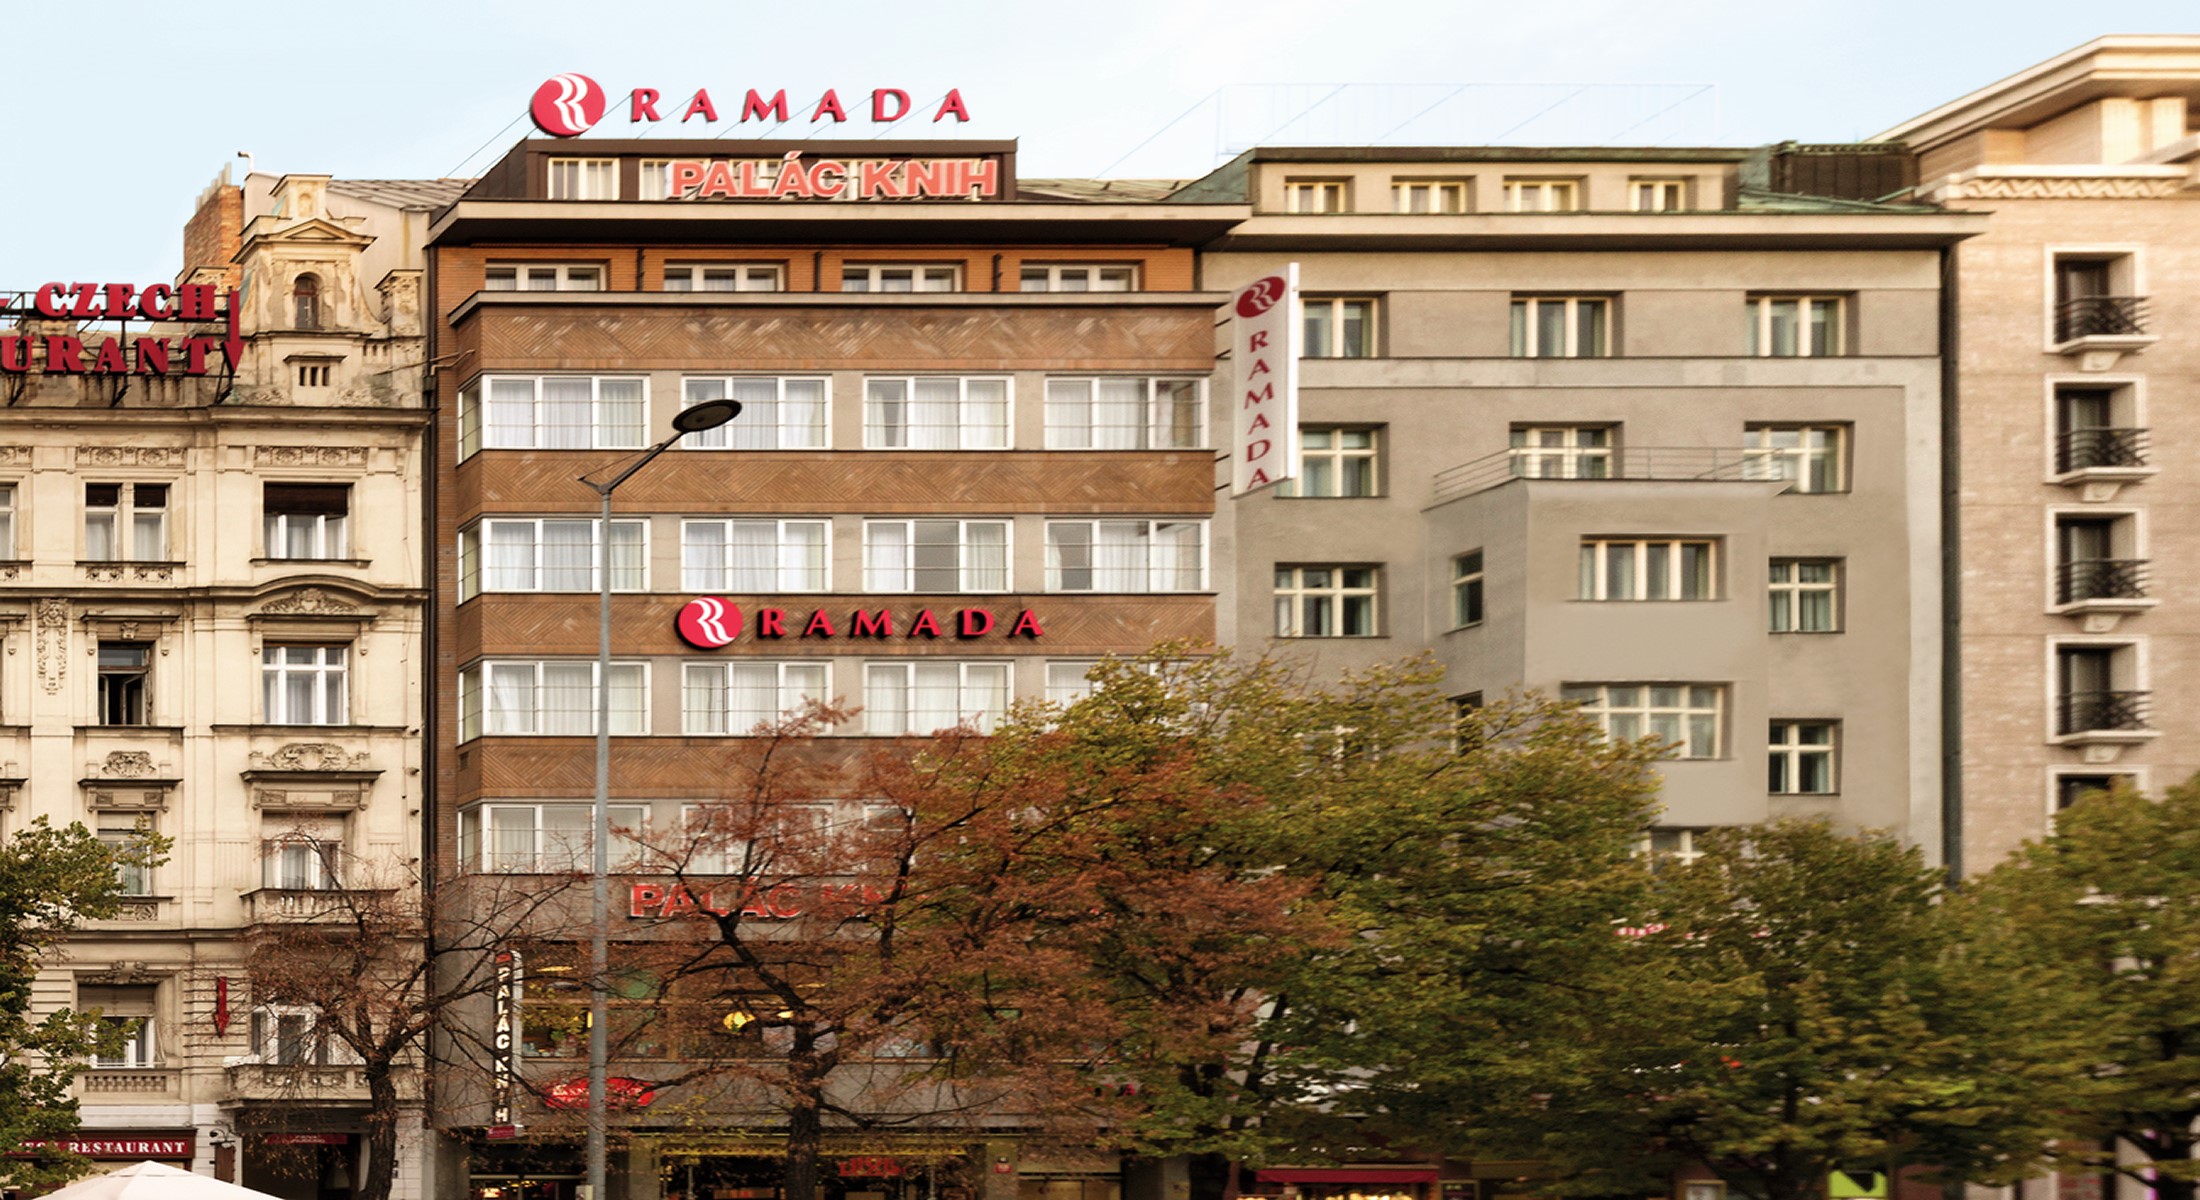 Hotel Ramada City photo 1 - full size